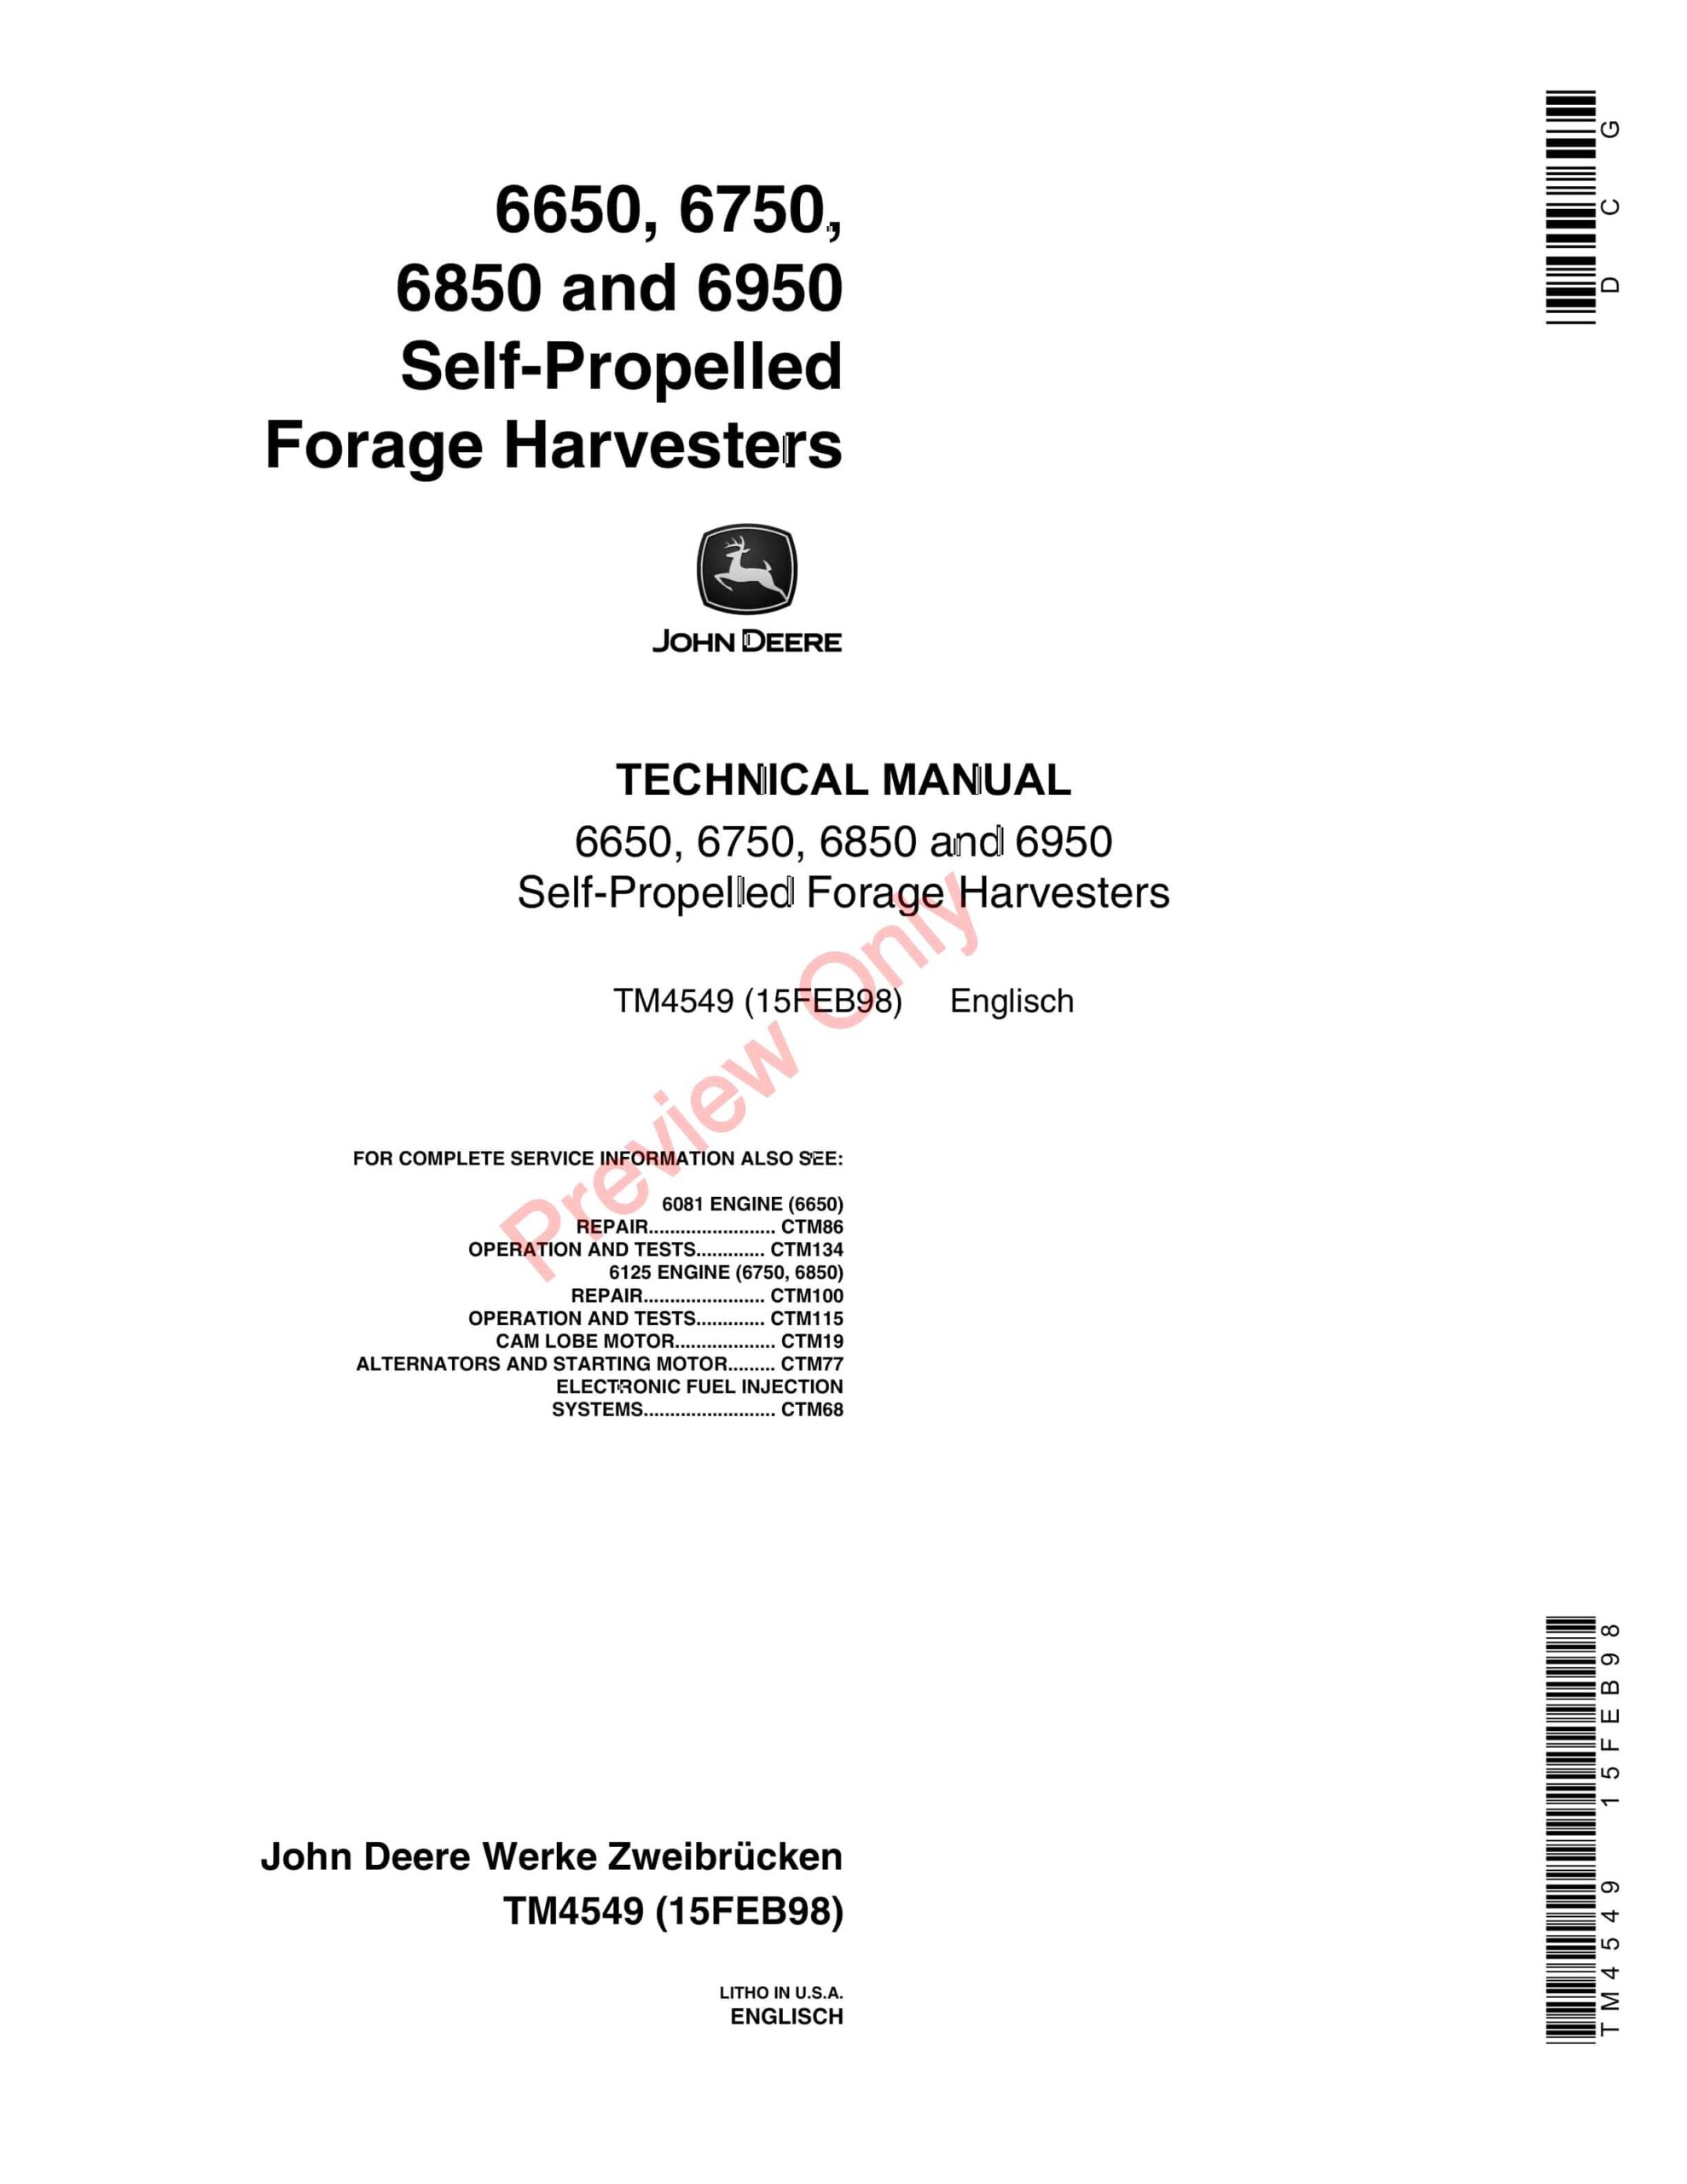 John Deere 6650, 6750, 6850 and 6950 Self-Propelled Forage Harvesters Technical Manual TM4549 15FEB98-1